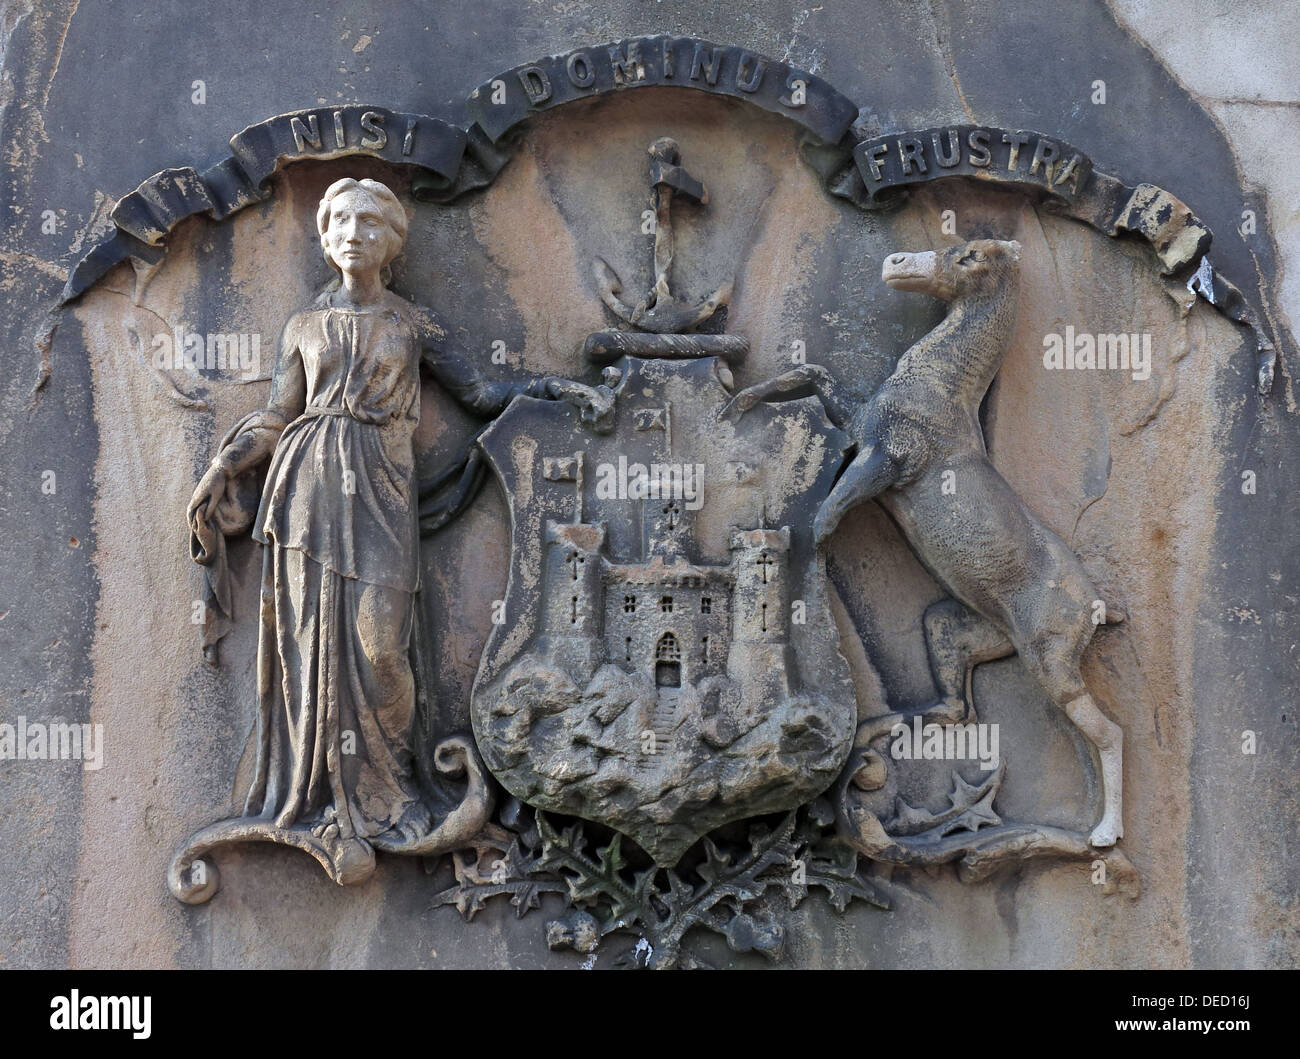 Nisi Dominus Frustra, The Crest of Edinburgh, on city stone fountain, Scotland Stock Photo